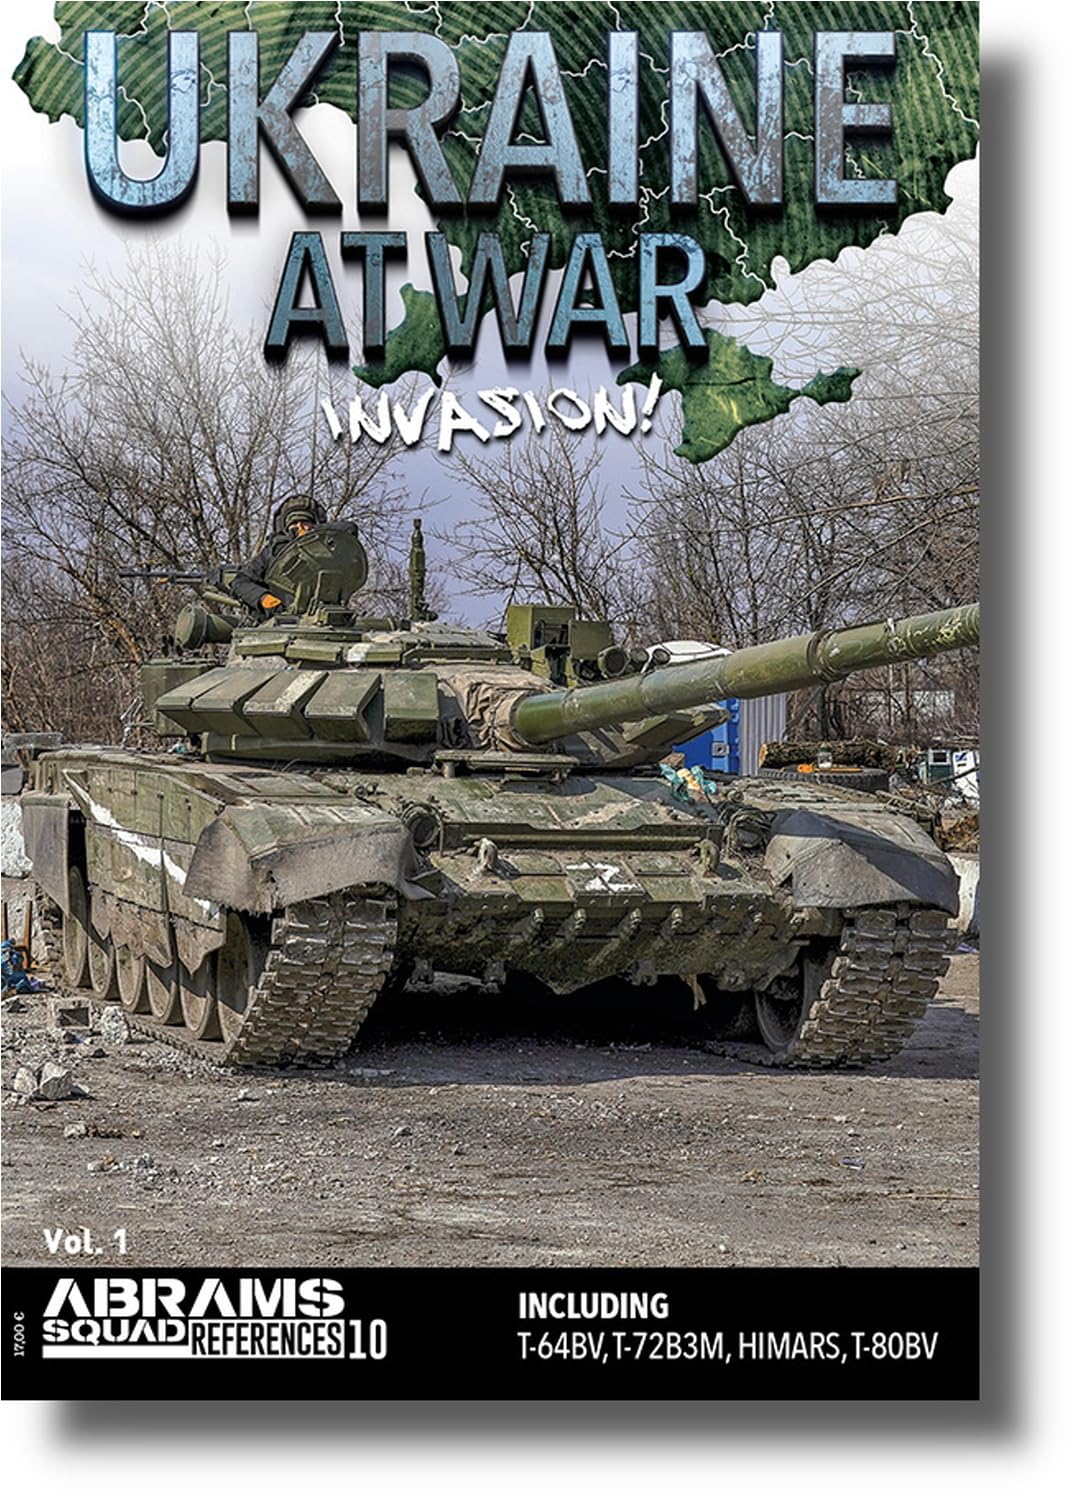 Pla Editions Abrams Squad References 10 Ukraine at War Vol.1 Invasion ! ASREF10